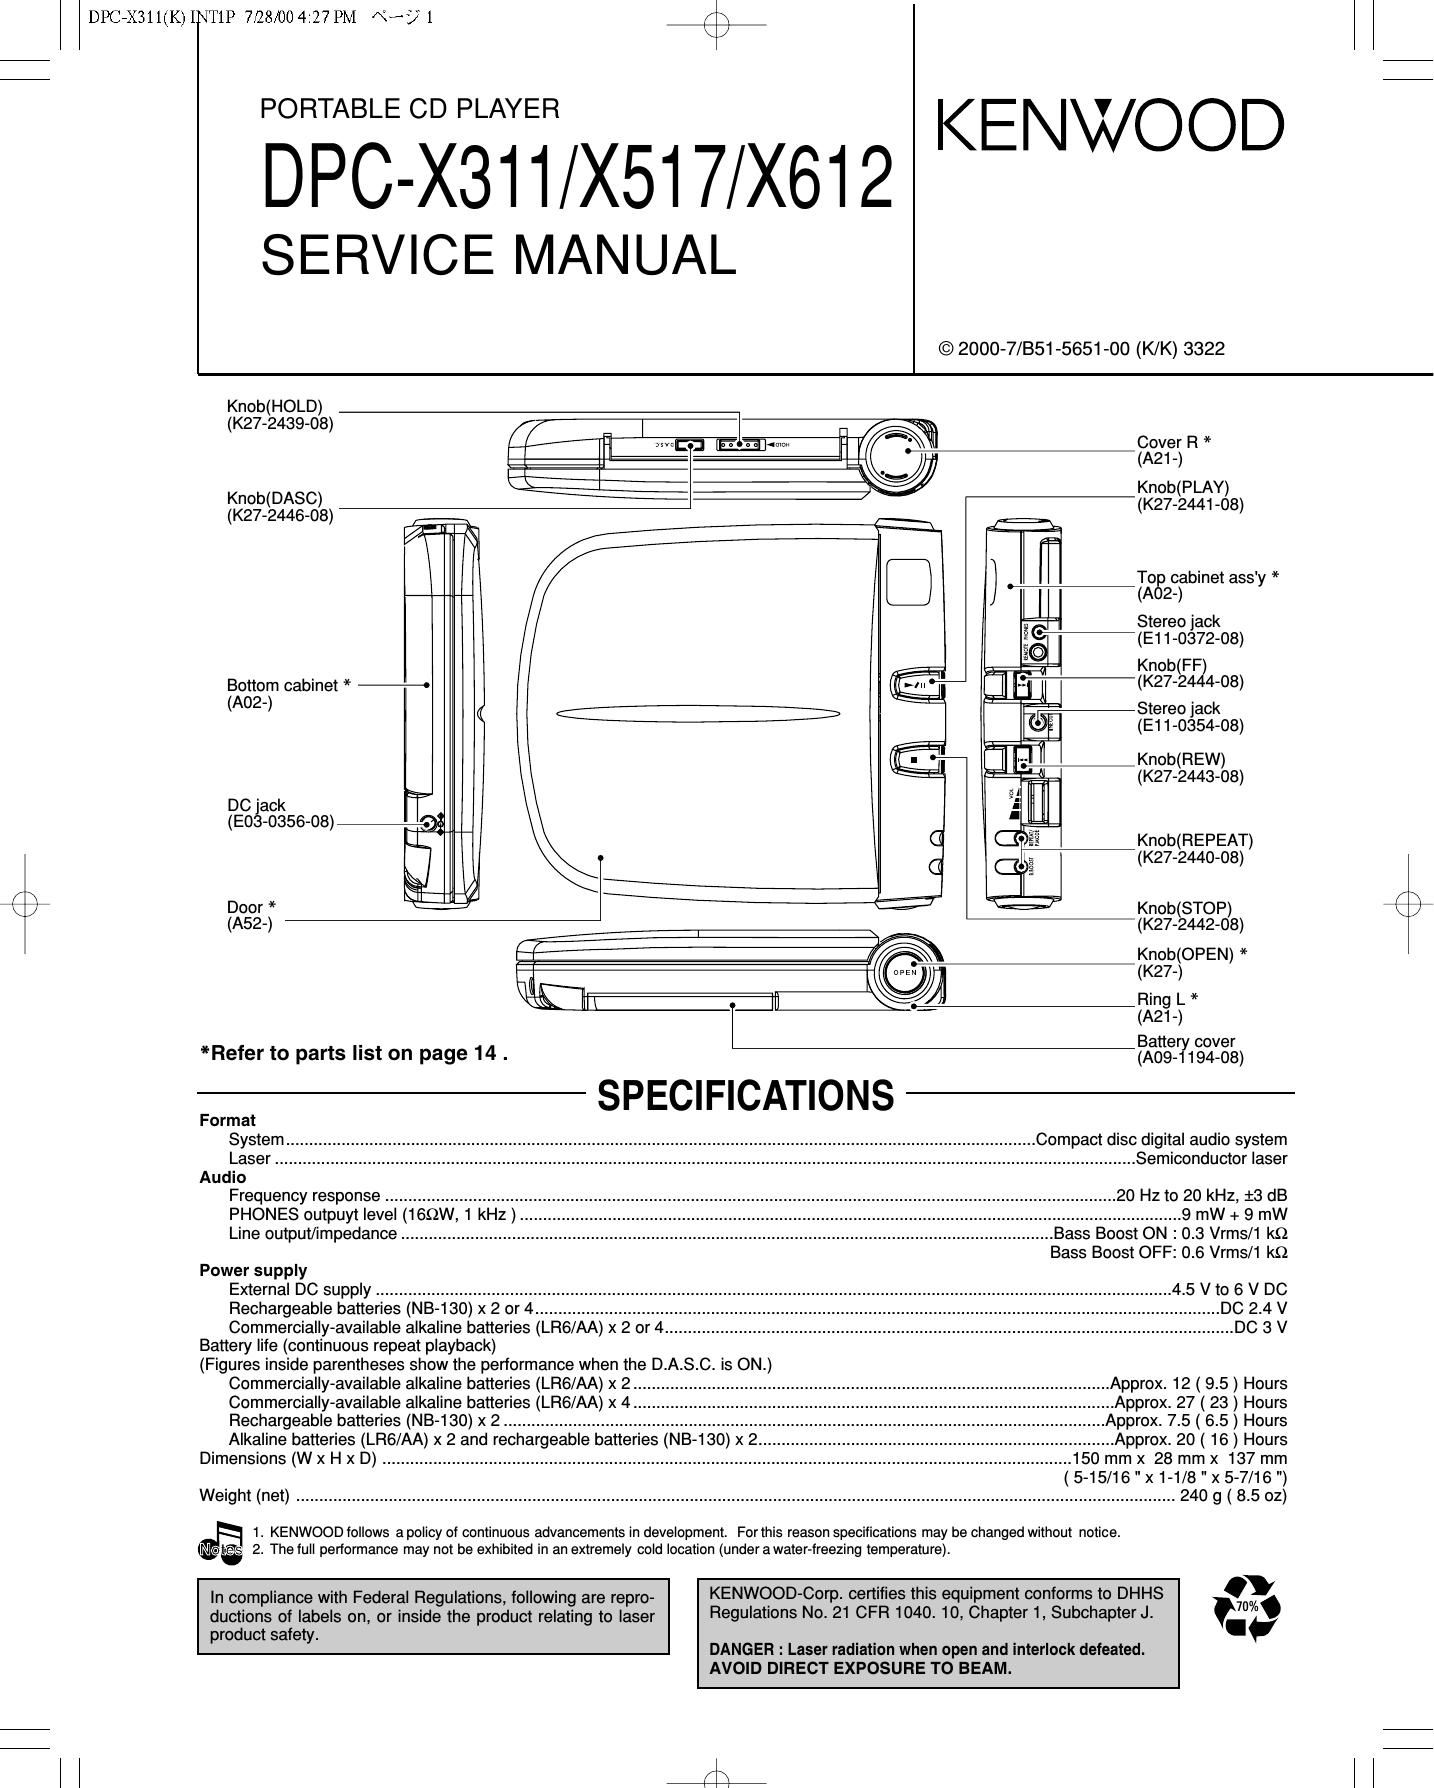 Kenwood DPCX 612 Service Manual